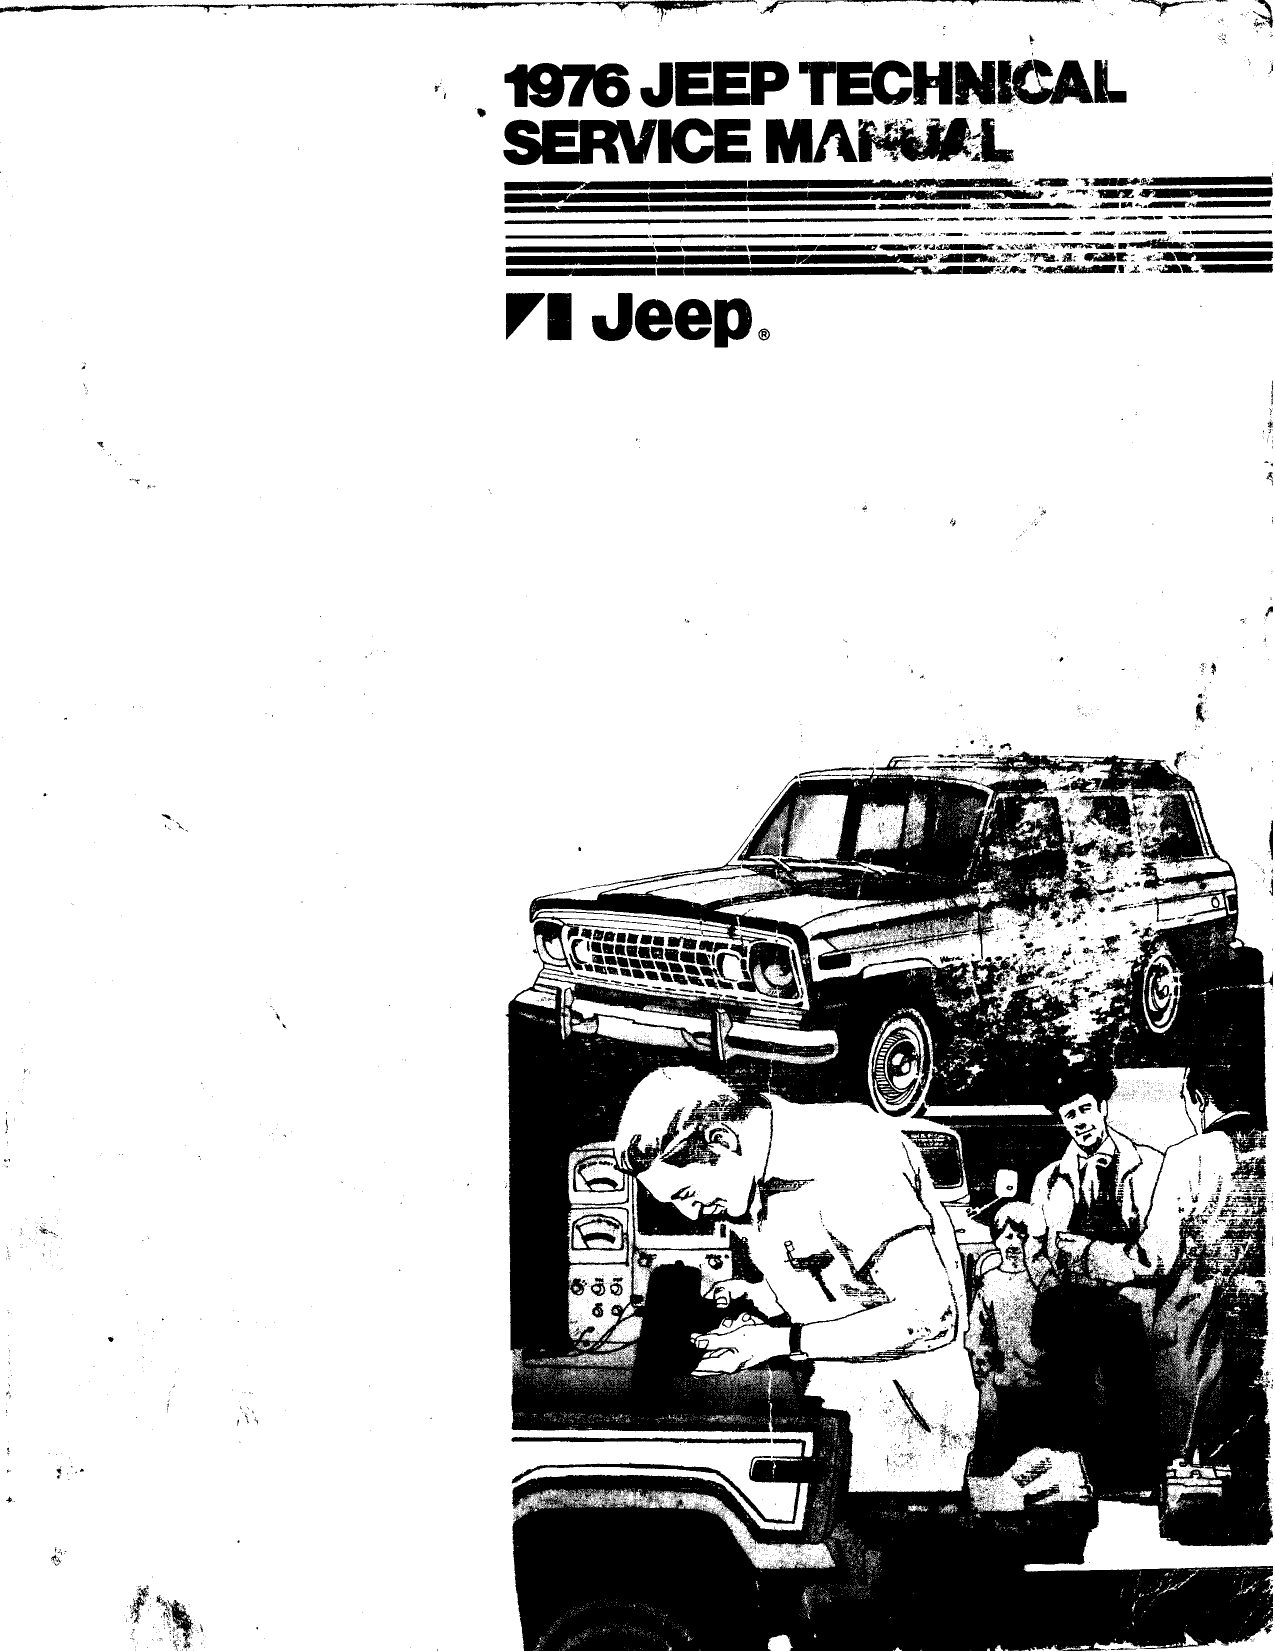 Technical Service Manual January 1975